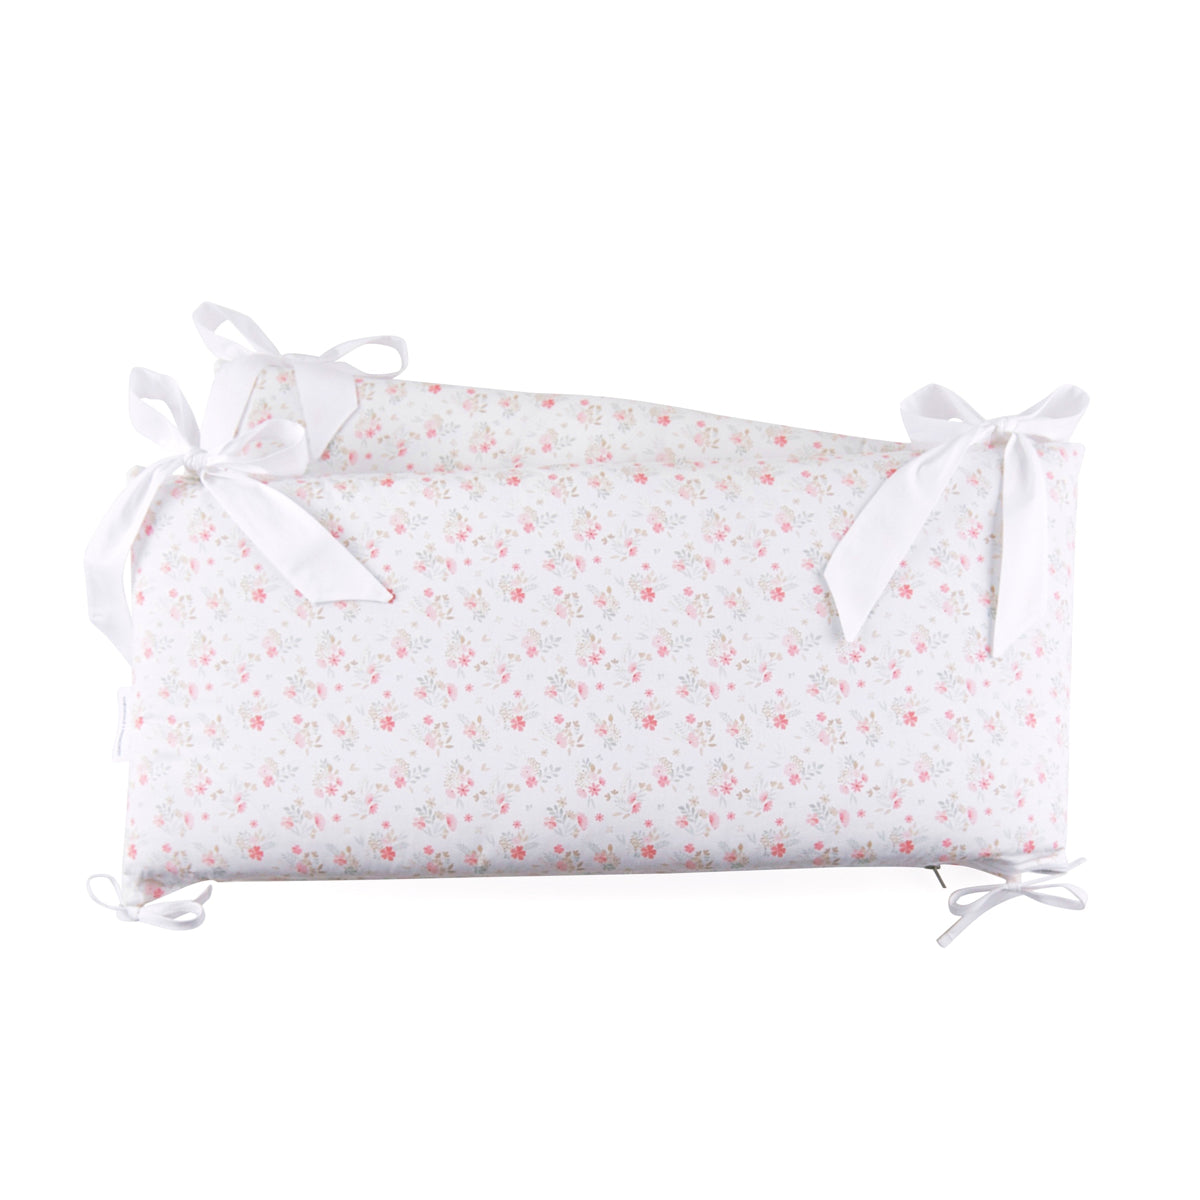 Theophile & Patachou Cot Bed Bumper 60 cm - Pink Flower